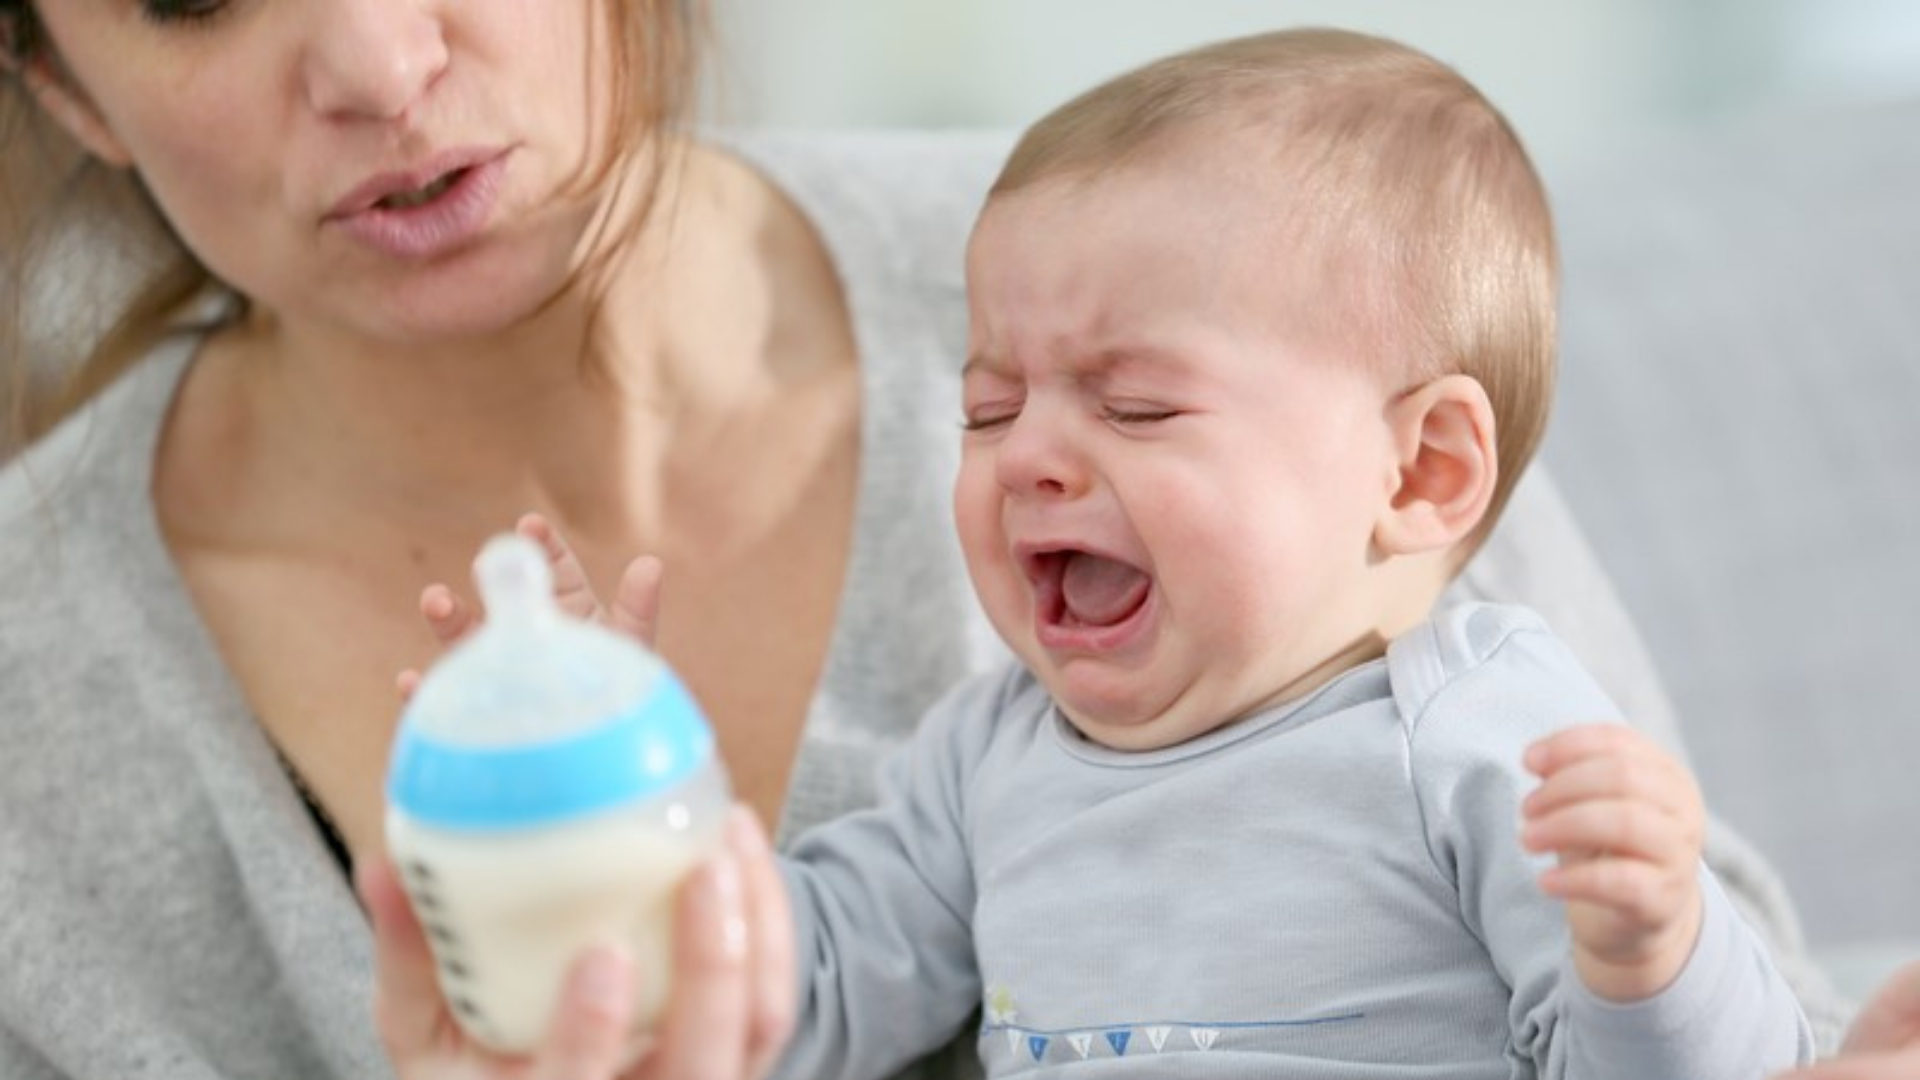 Feeding problems in infants